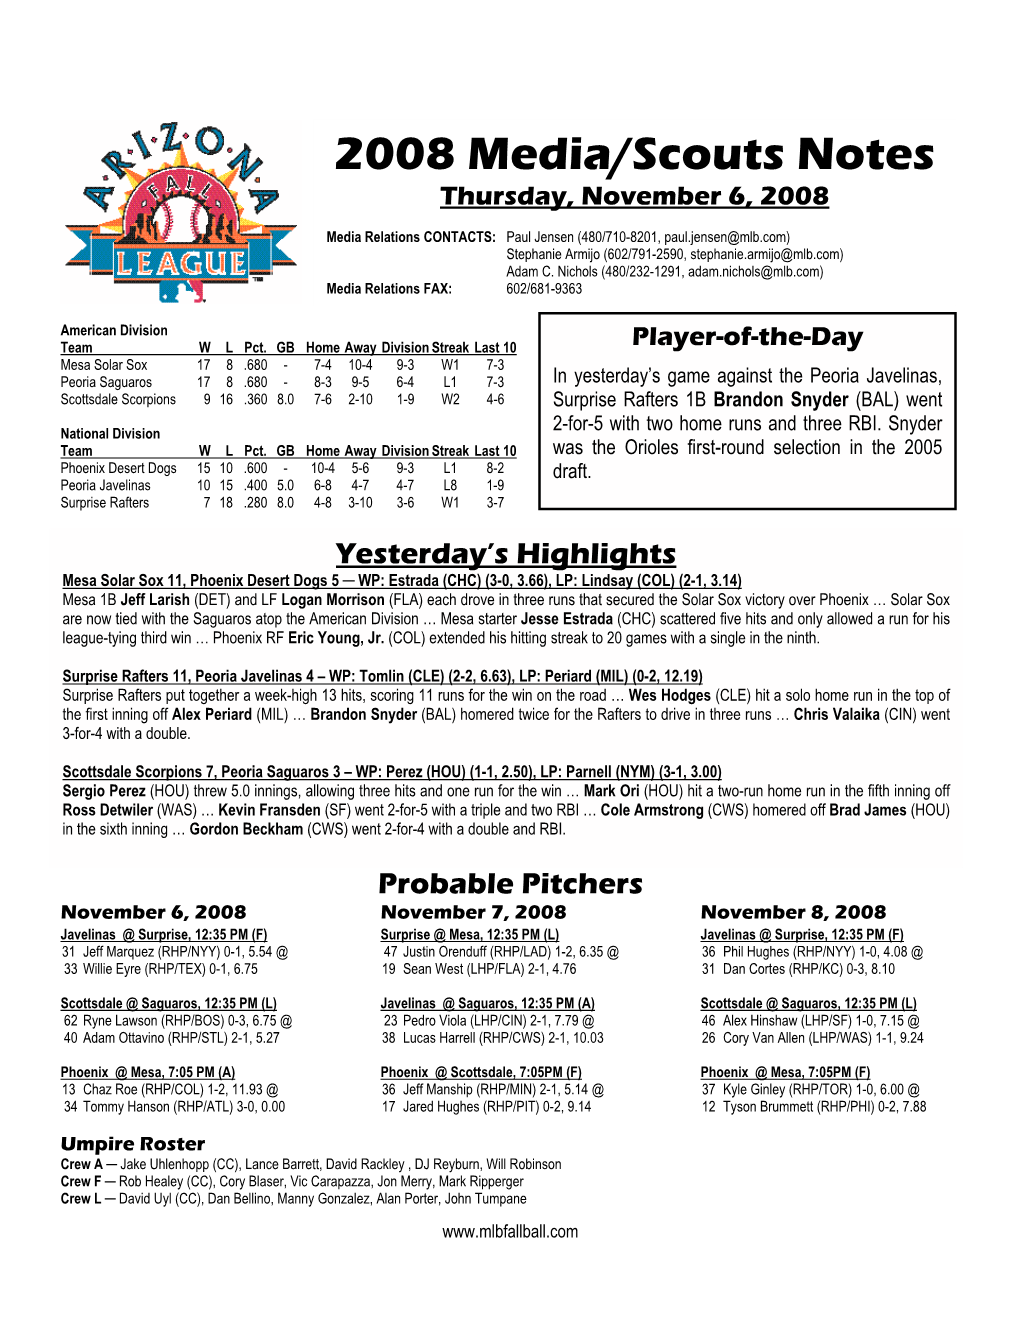 2008 Media/Scouts Notes Thursday, November 6, 2008